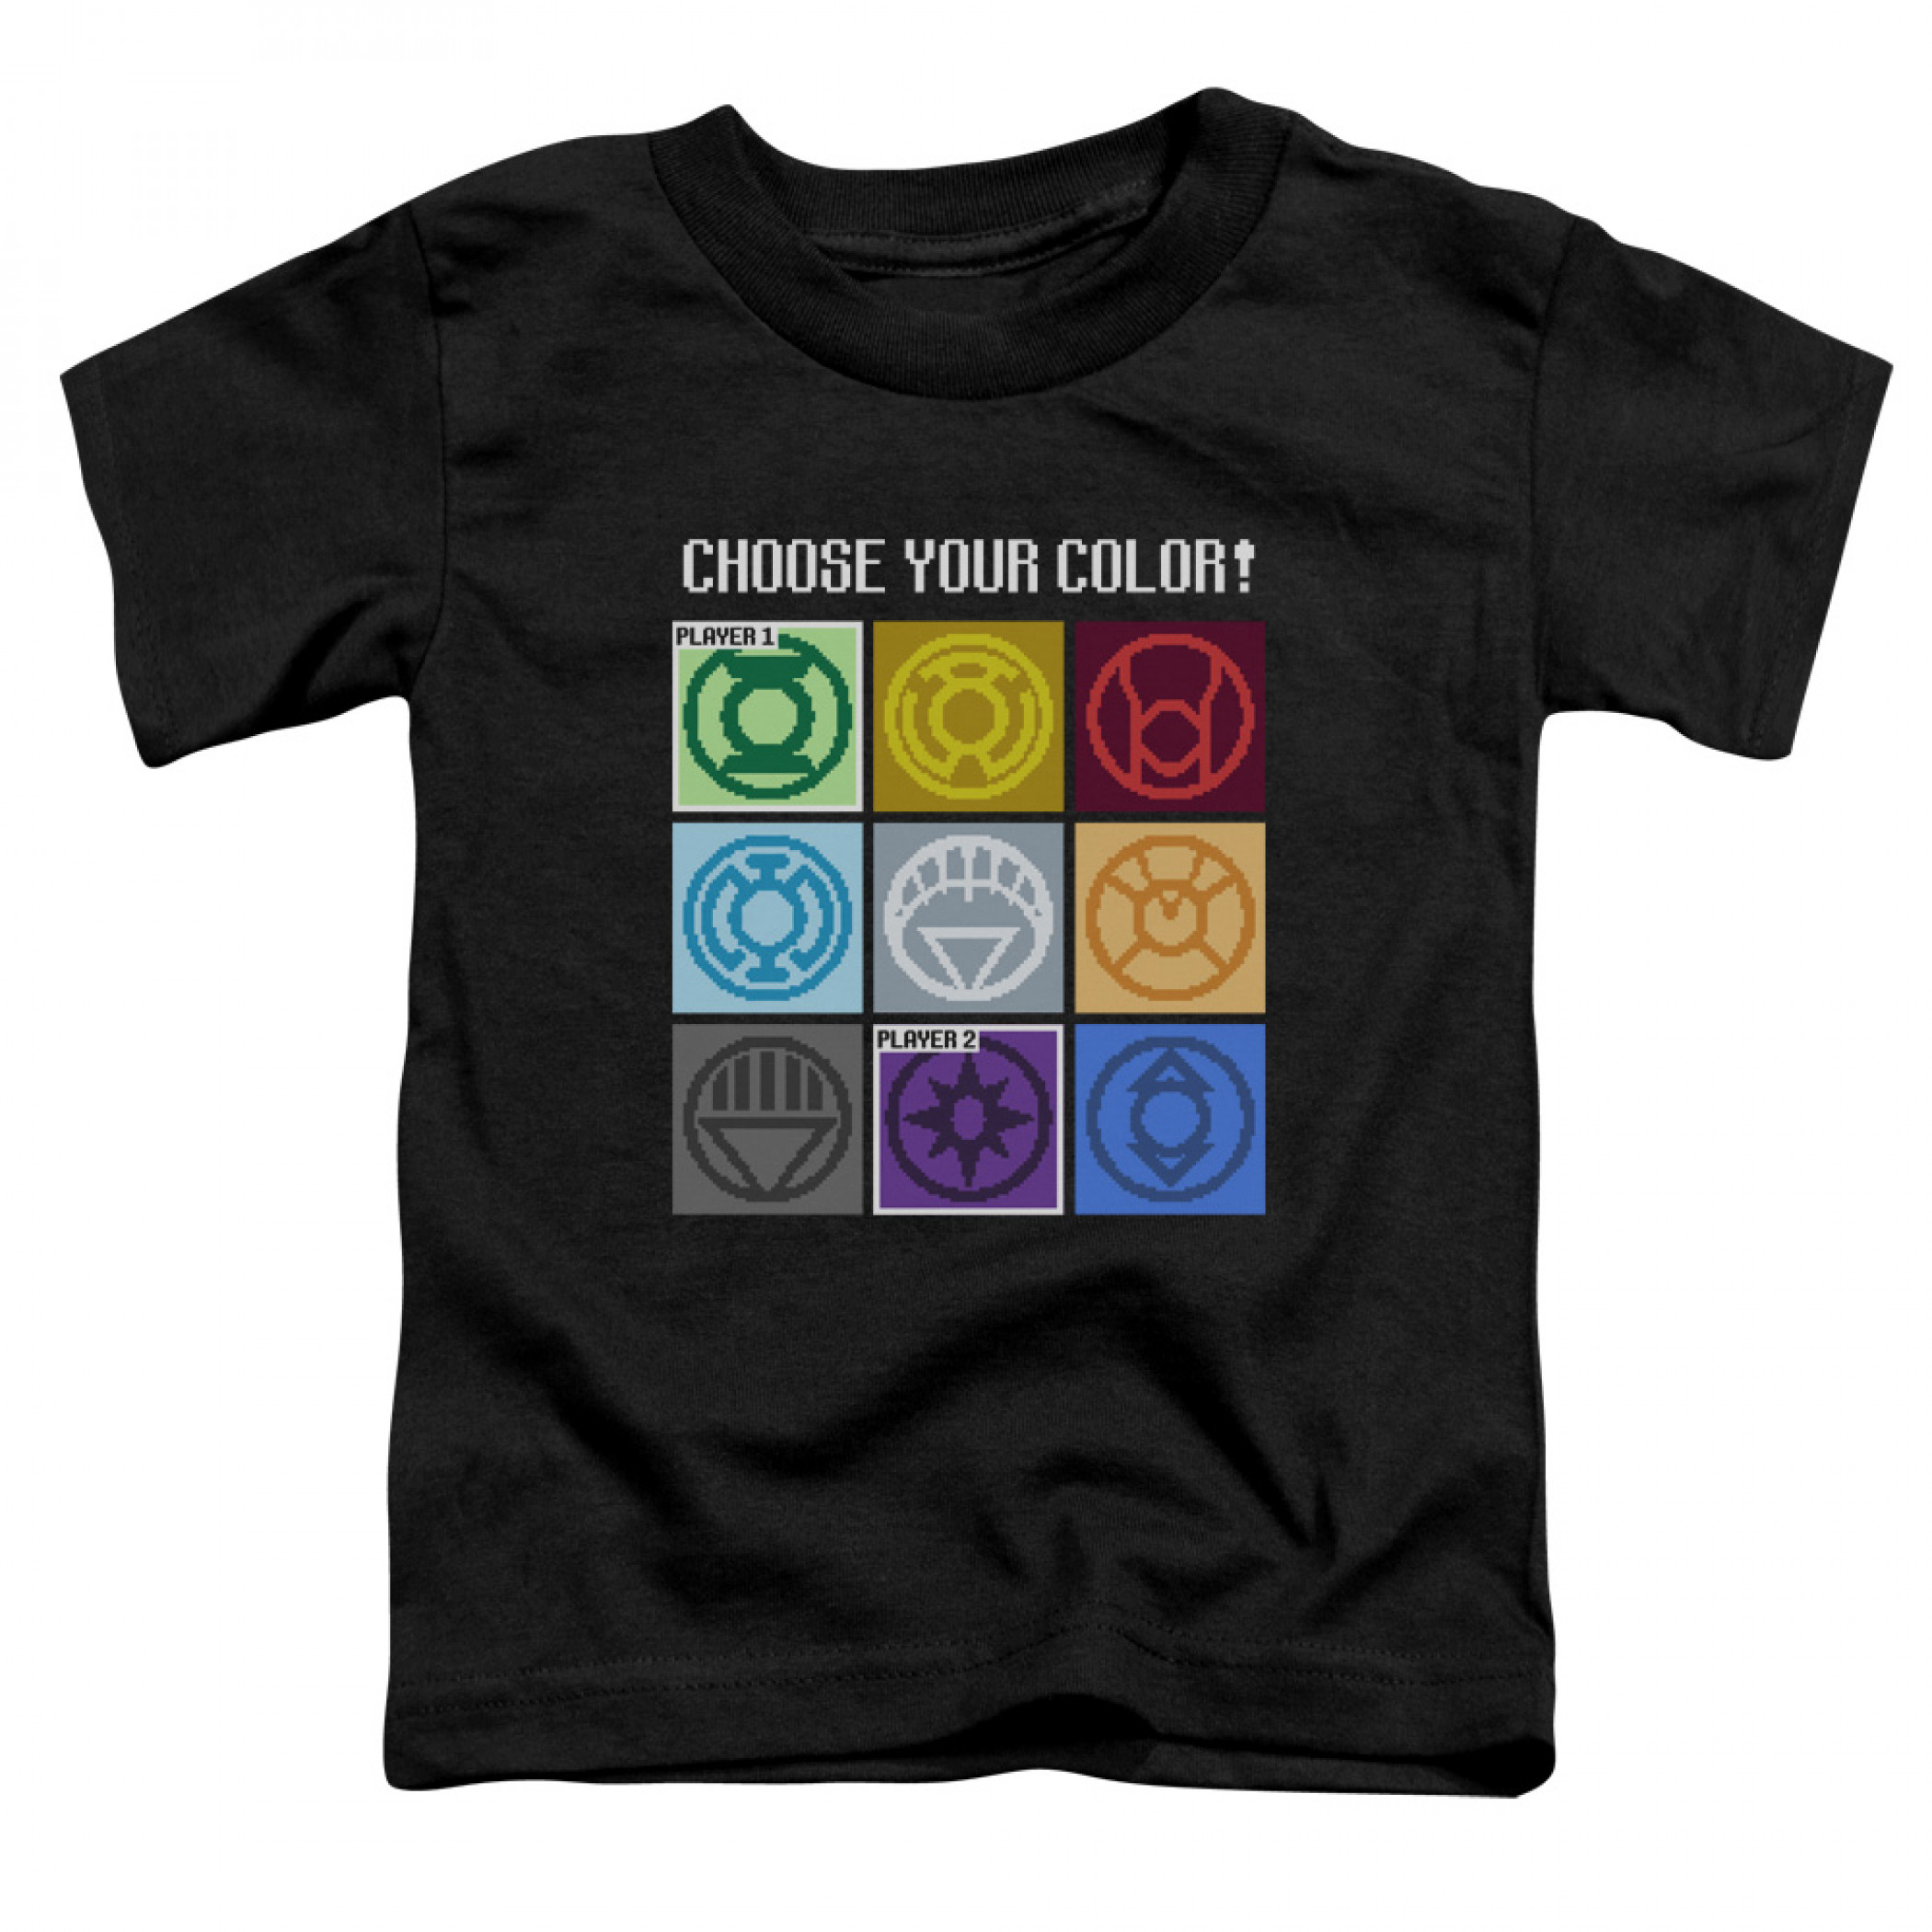 Green Lantern Choose Your Color Toddler T-Shirt